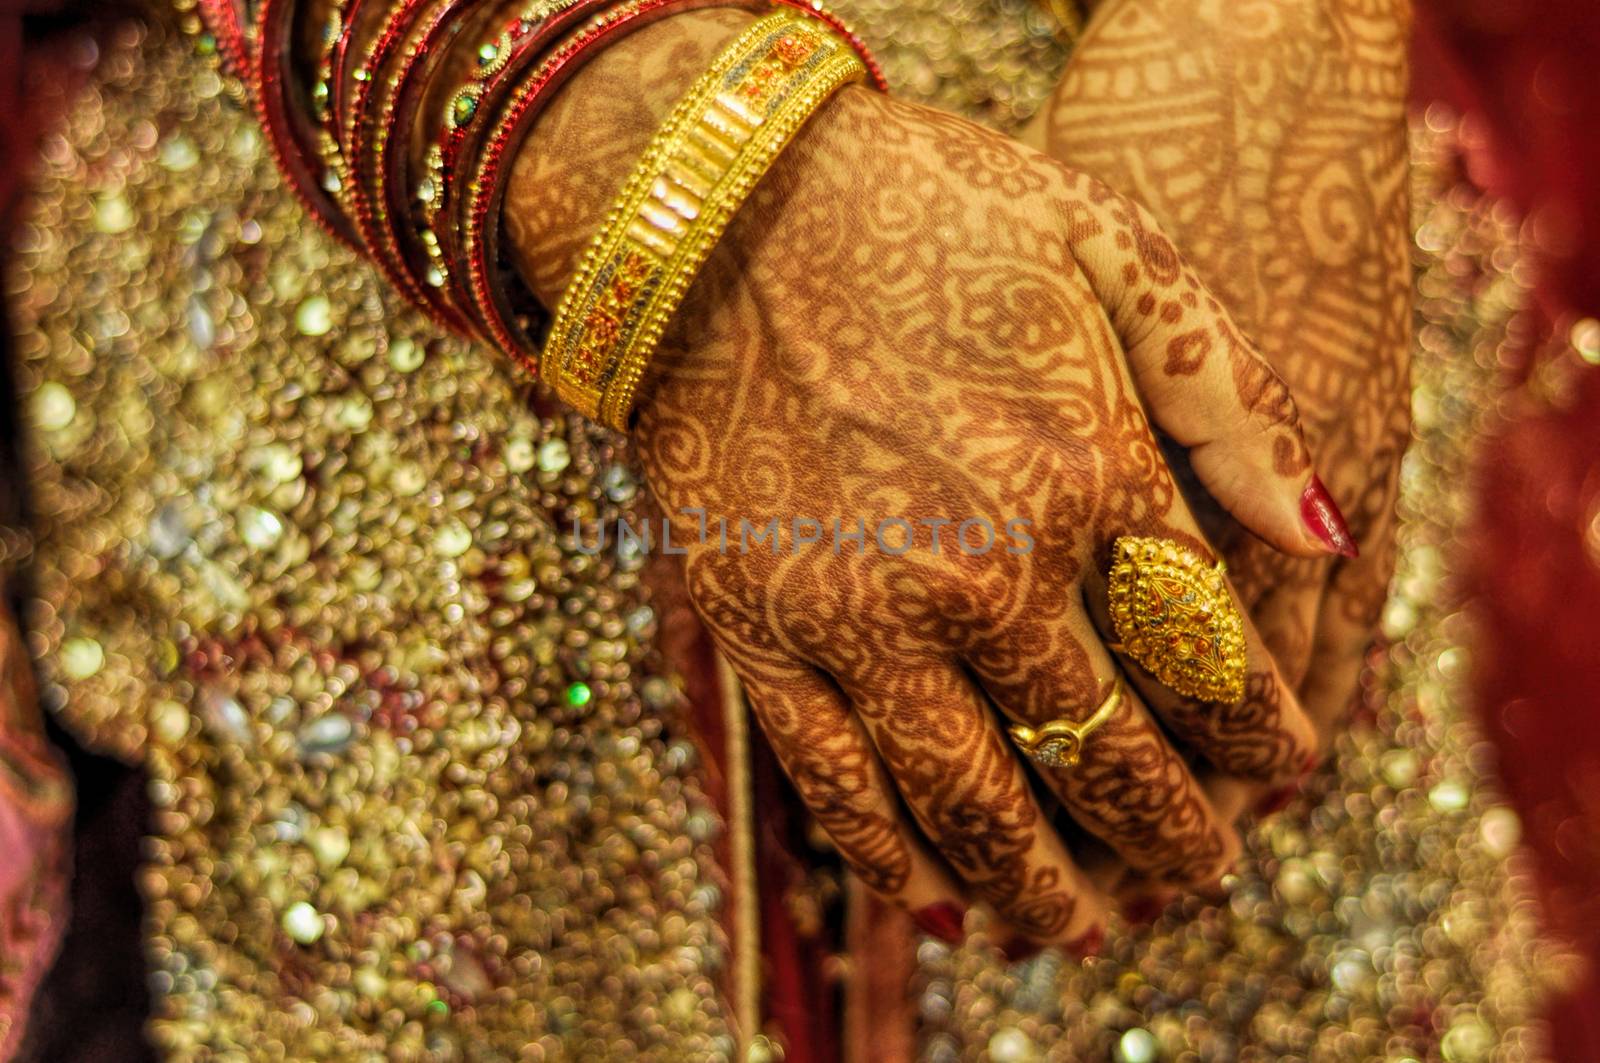 Henna on brides hands by MichalKnitl